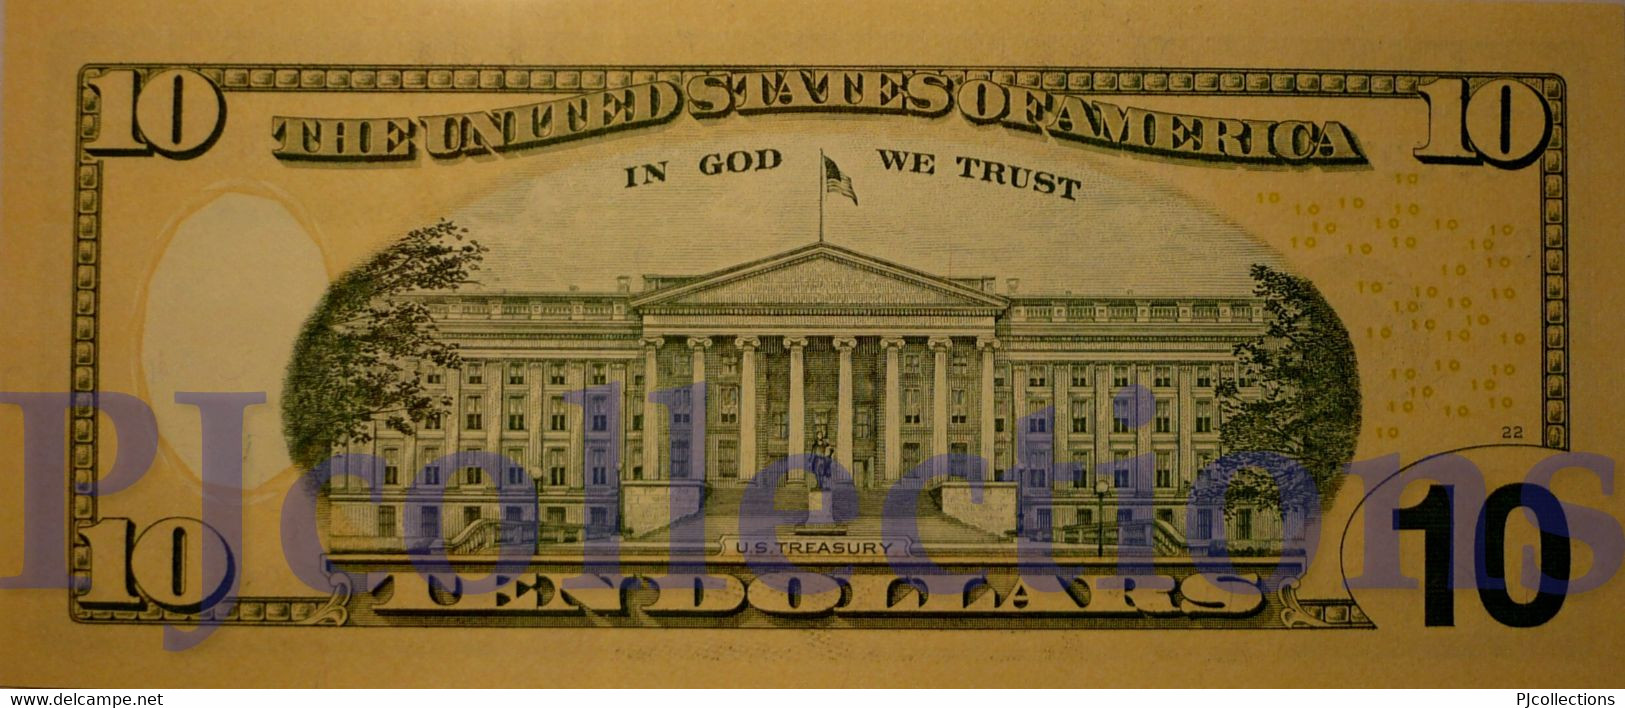 UNITED STATES OF AMERICA 10 DOLLARS 2009 PICK 532 PREFIX "C" UNC - Federal Reserve (1928-...)